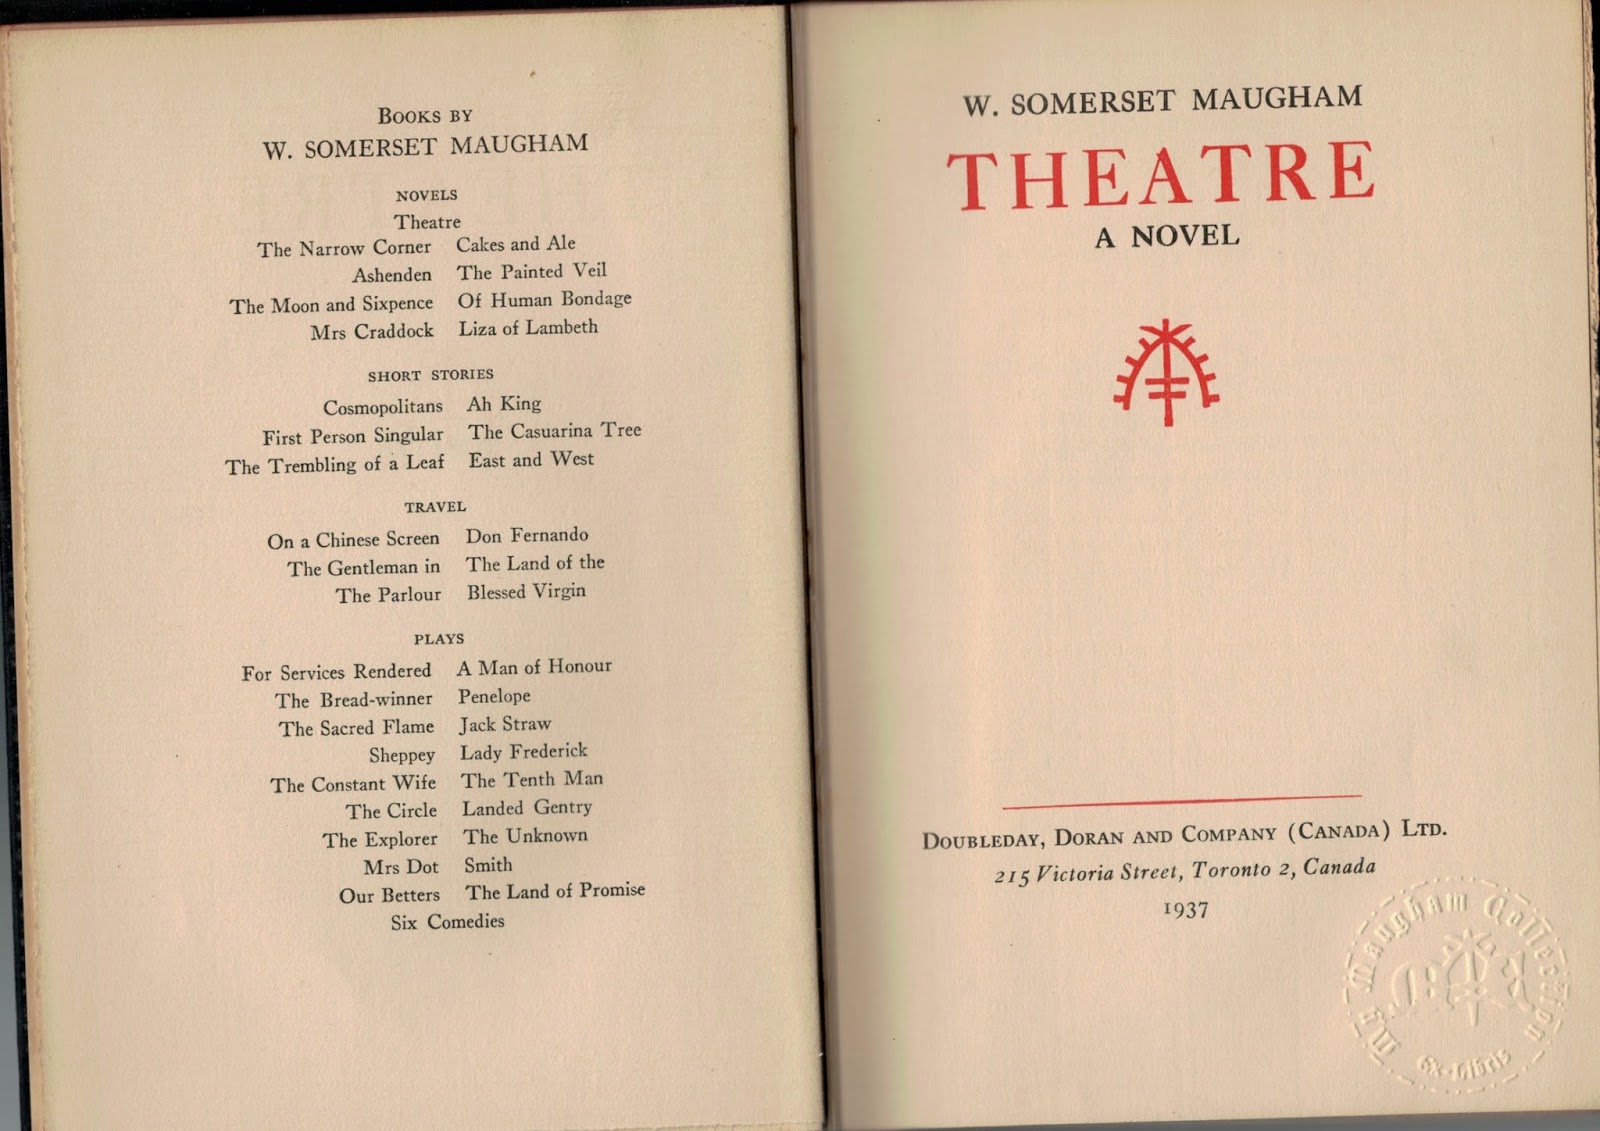 title page of Theatre 1937 Doubleday, Doran & Co.